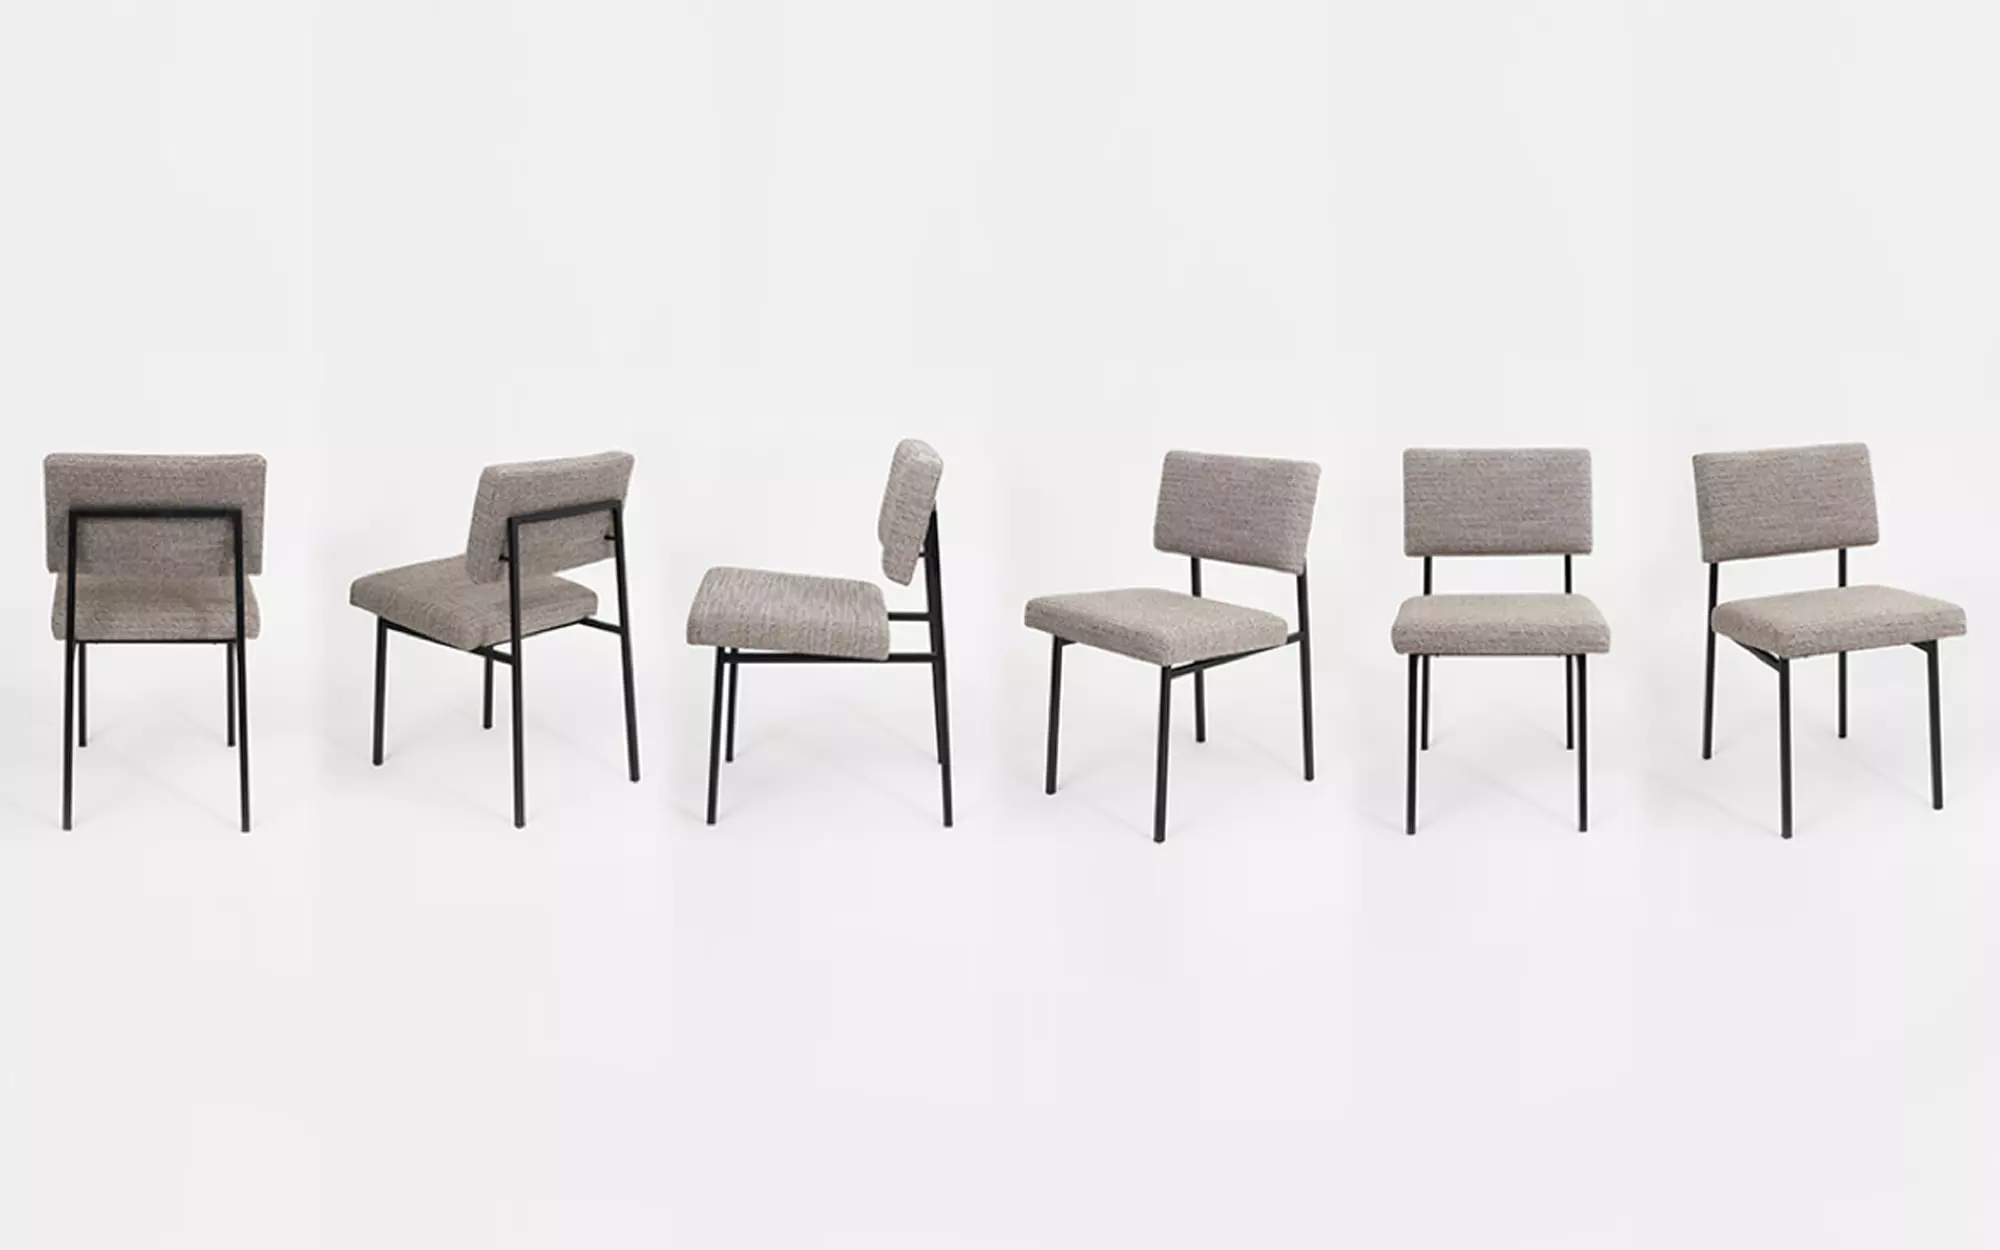 Seating (6) - Gérard Guermonprez - seating chair- Galerie kreo